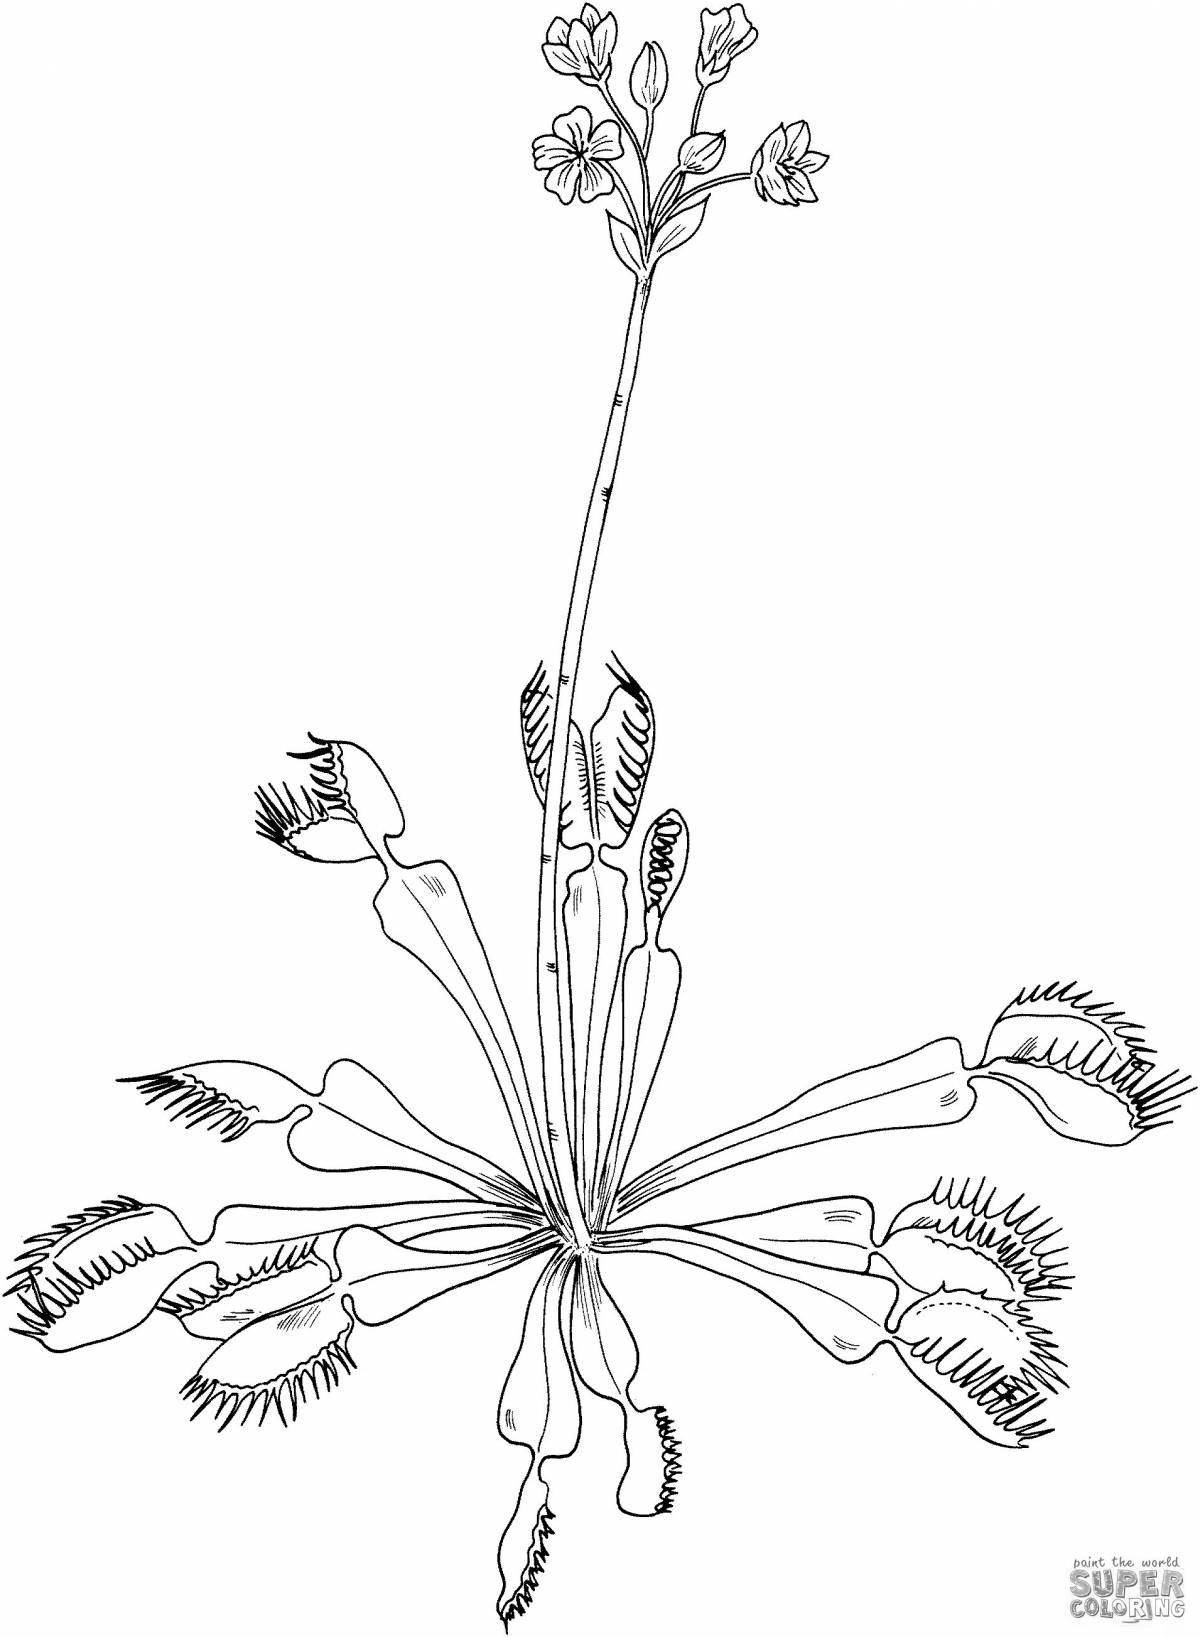 Coloring page playful venus flytrap